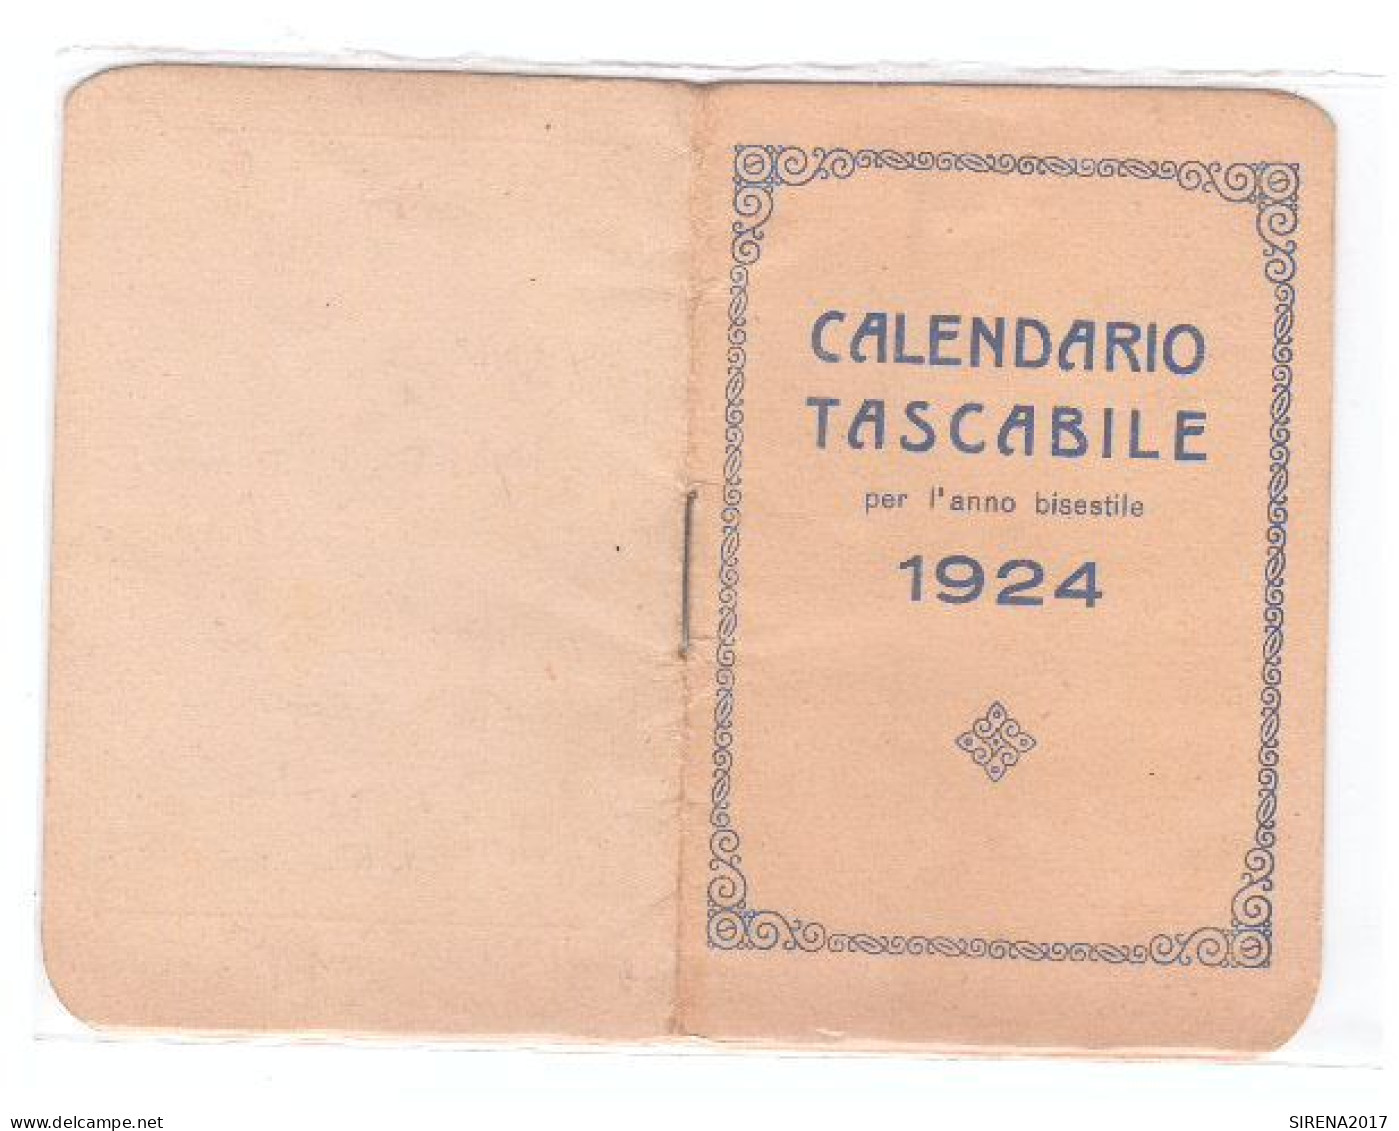 CALENDARIO TASCABILE PER L'ANNO BISESTILE 1924 - Tamaño Pequeño : 1961-70